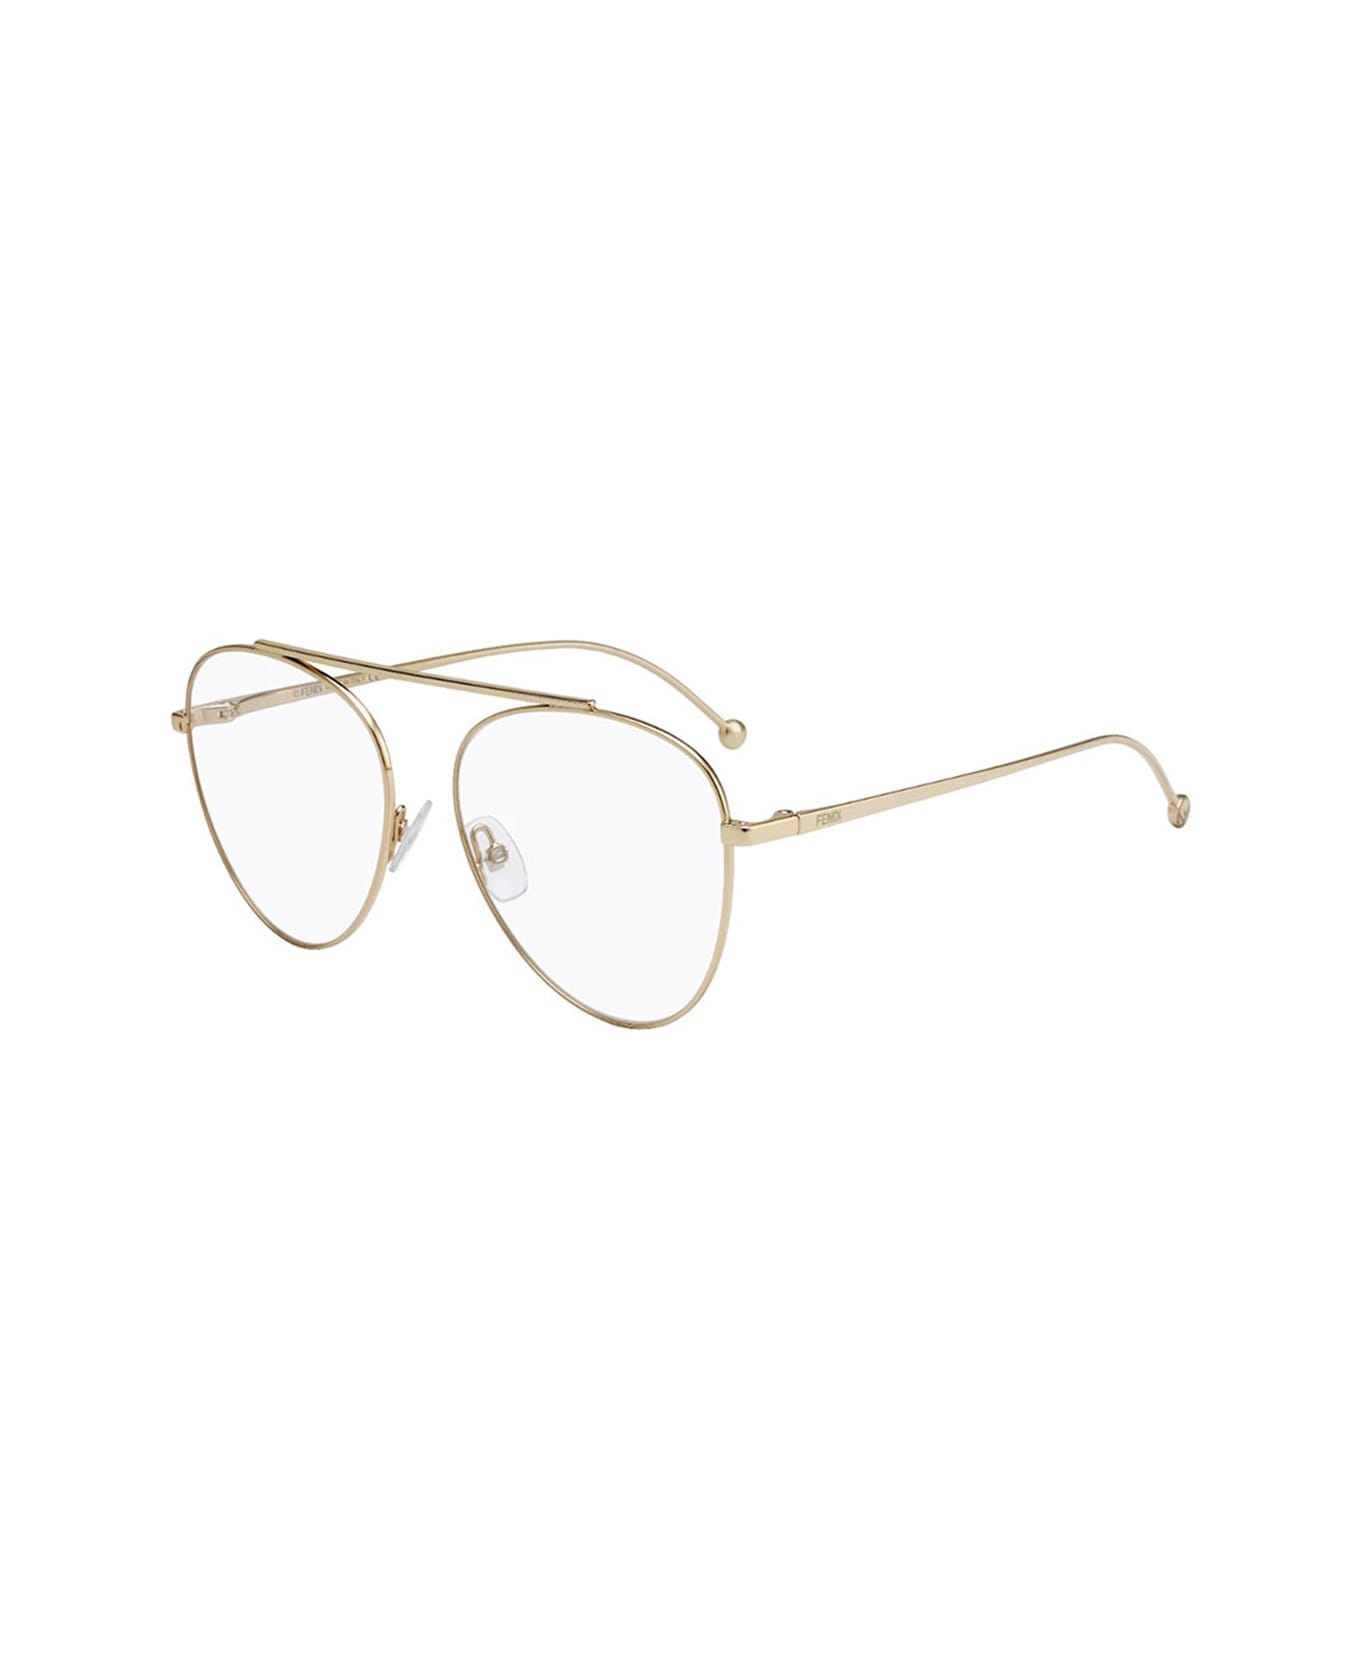 Fendi Eyewear Ff 0352 Glasses - Oro アイウェア